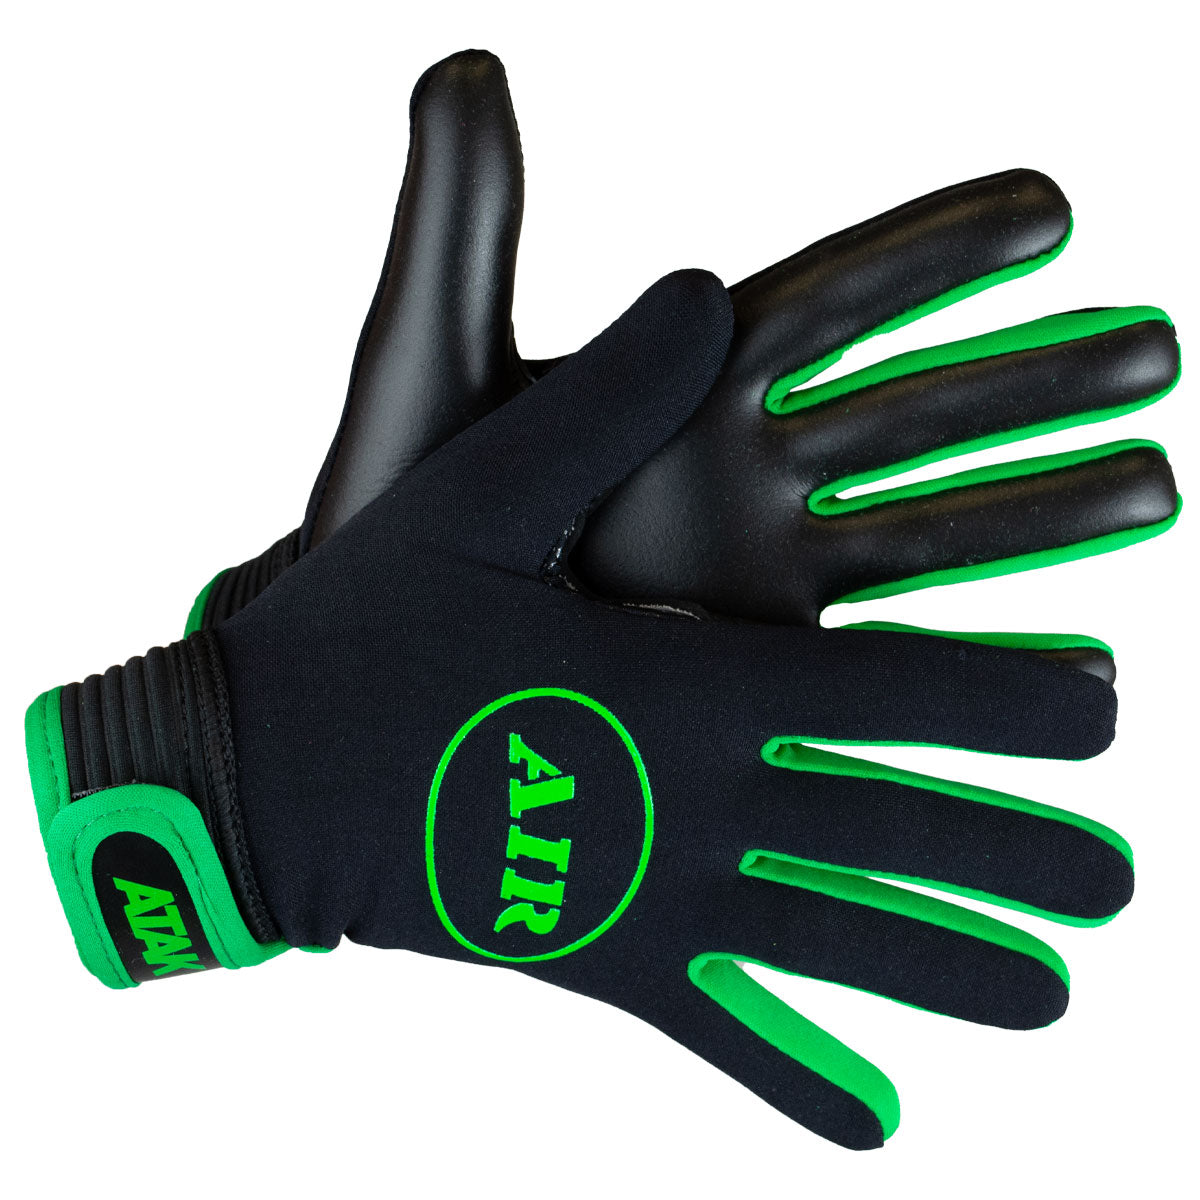 Atak Air Gaelic Gloves - Adult - Green